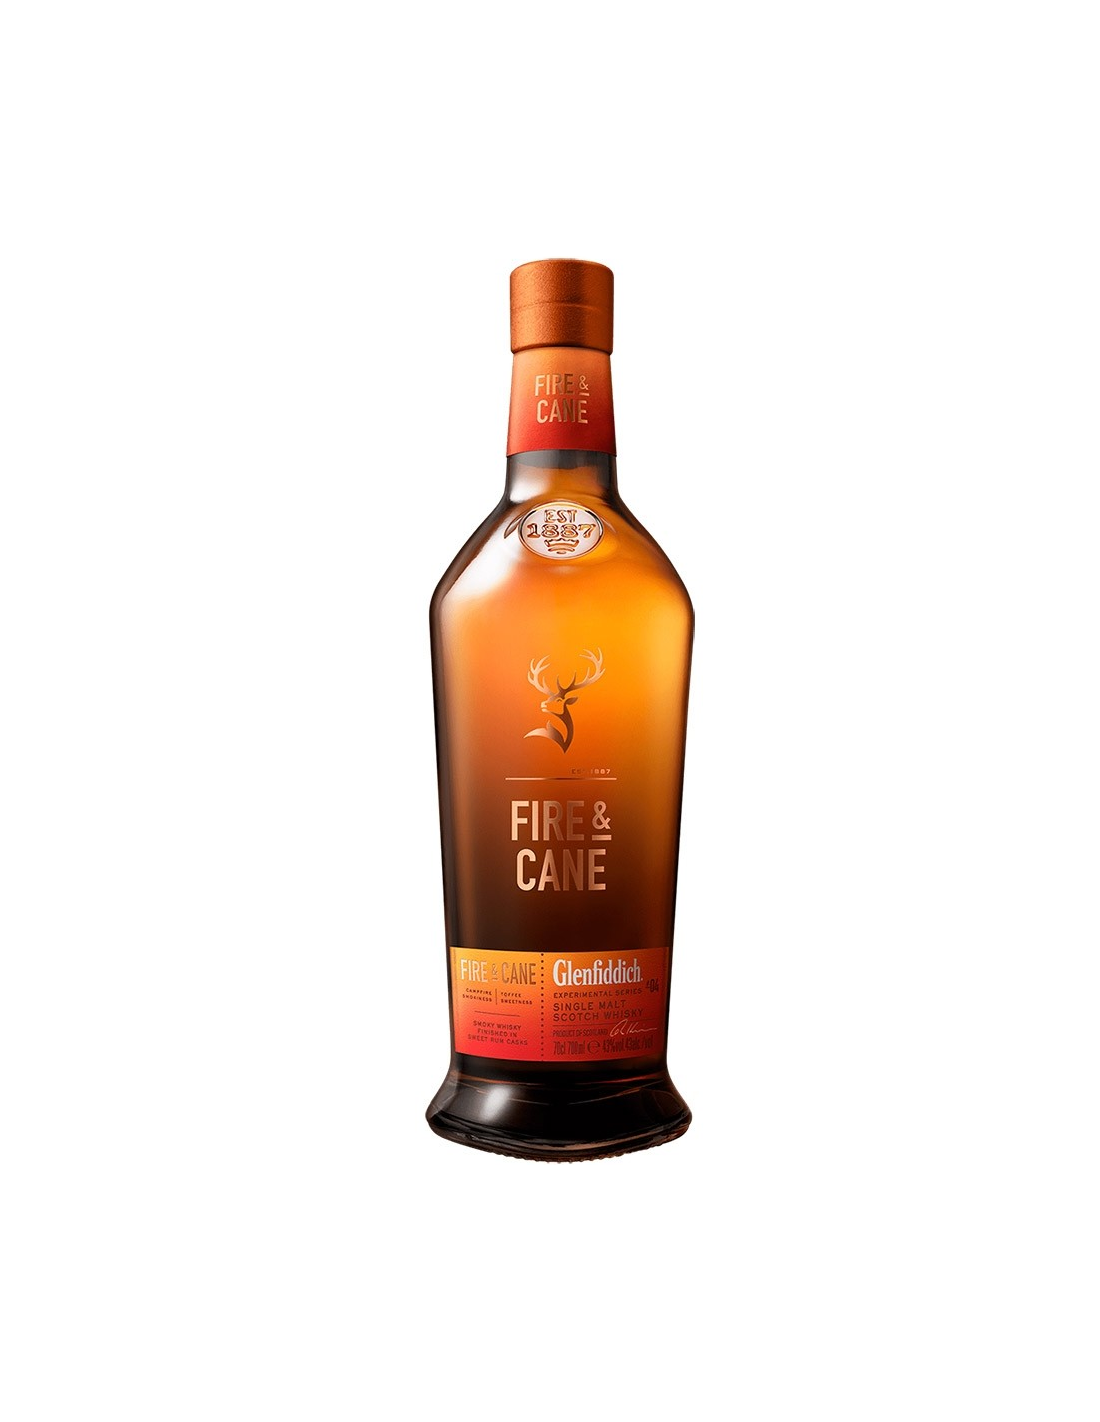 Whisky Glenfiddich Fire & Cane 0.7L, 43% alc., Scotia alcooldiscount.ro